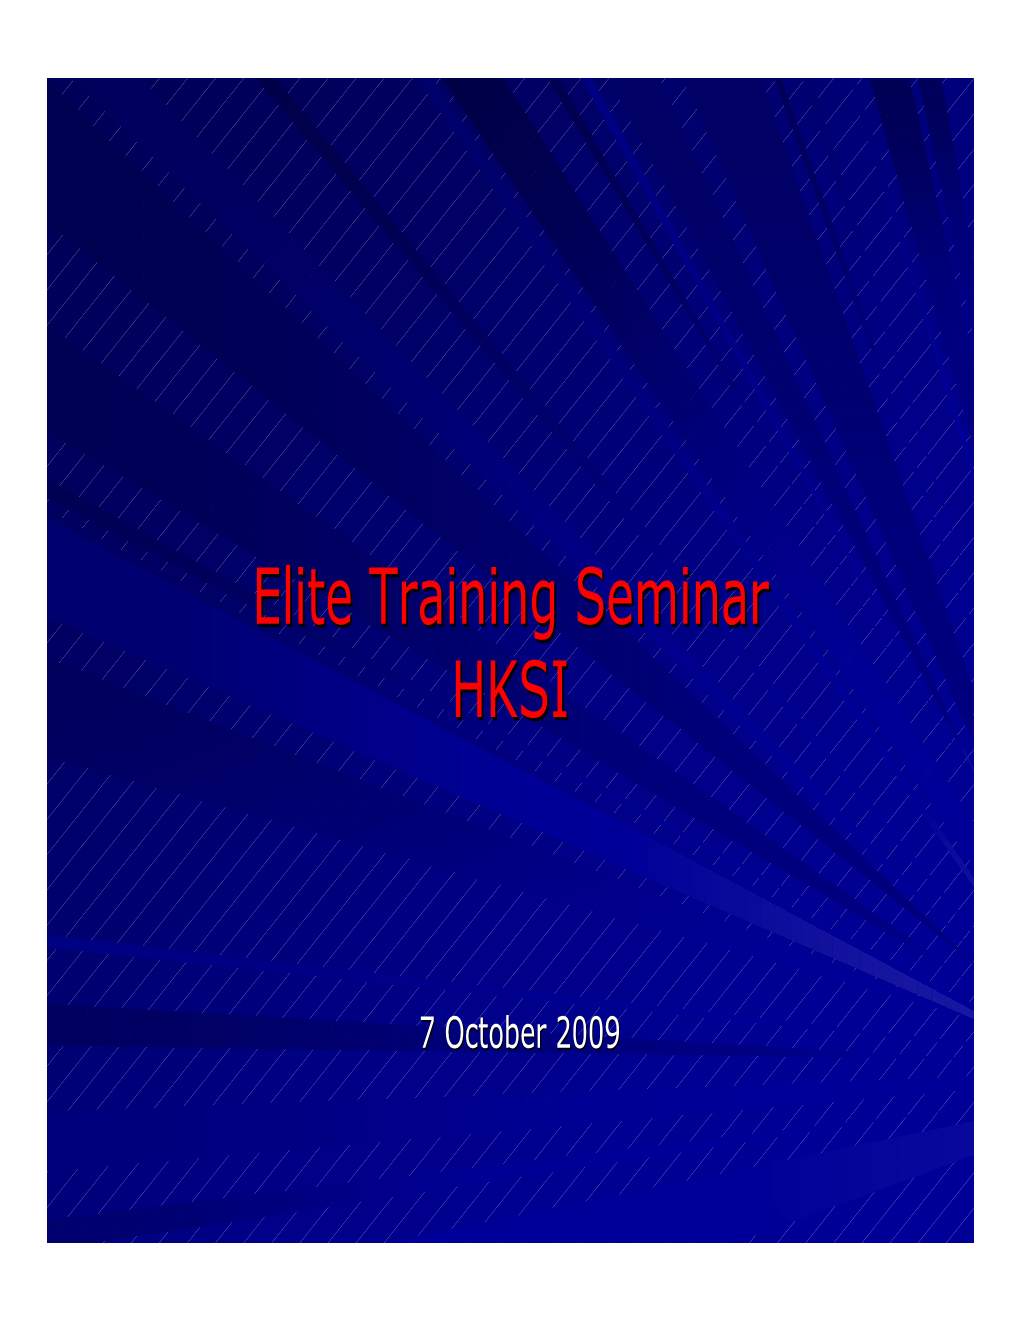 Elite Training Seminar HKSI